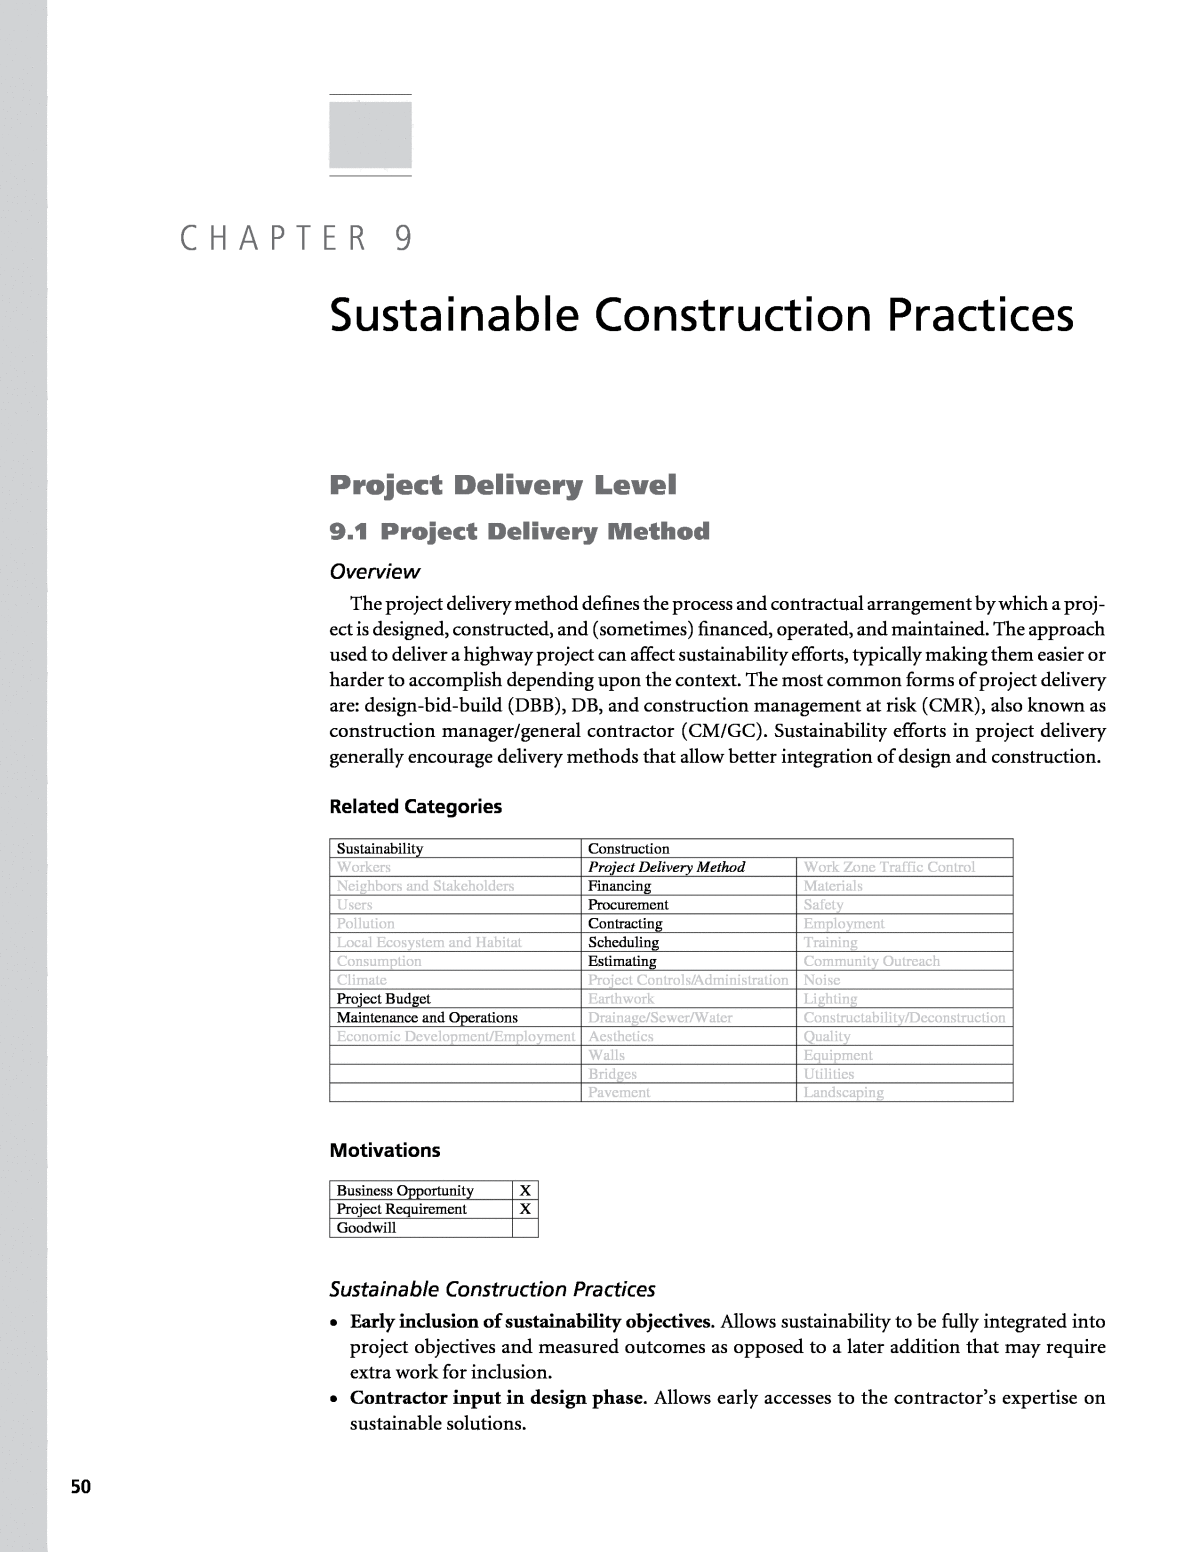 Seeking a builder to finish up our SCP Area 51 Complex [10k+] - Recruitment  - Developer Forum